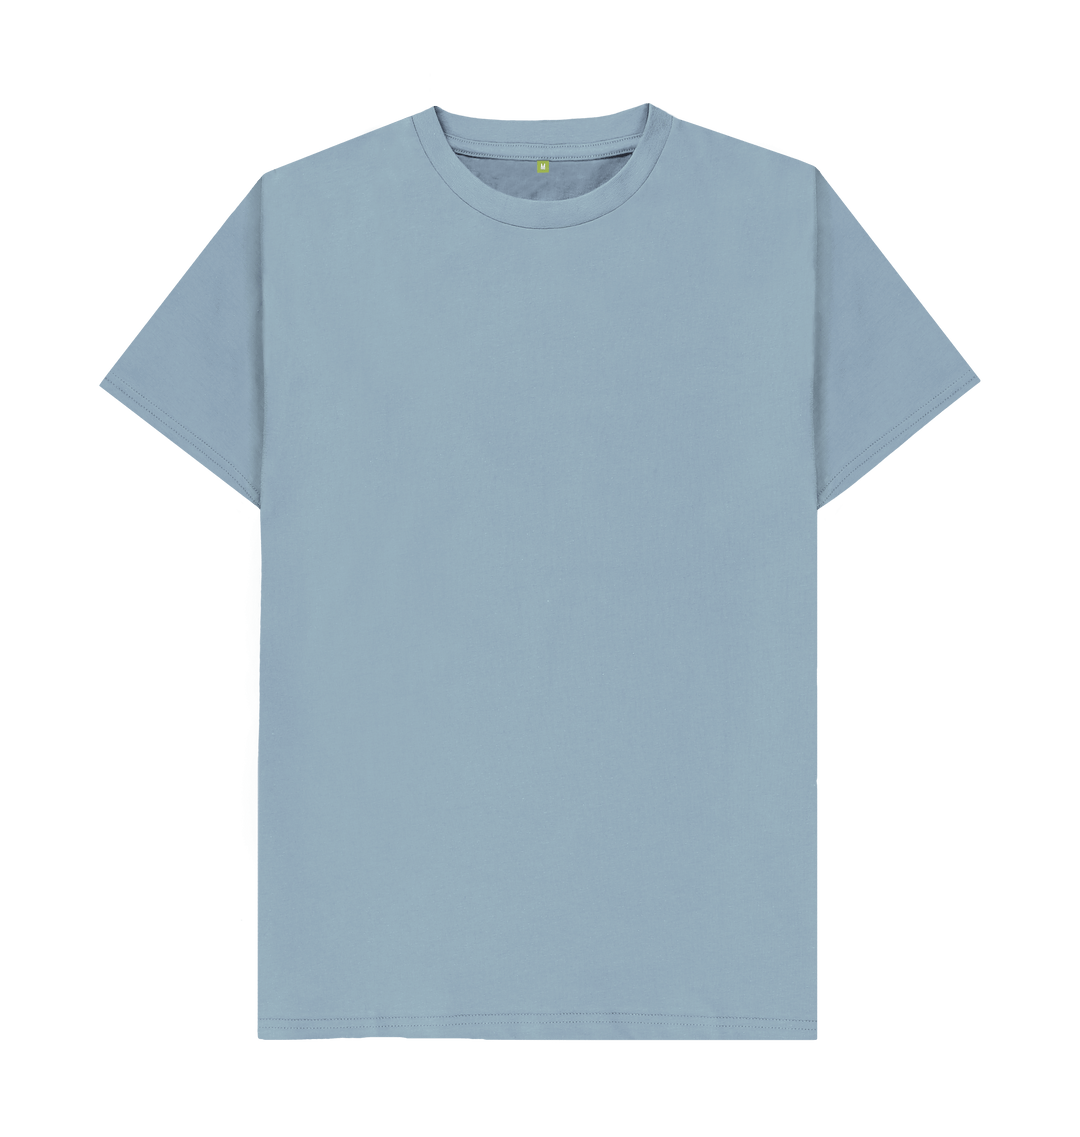 Plain t-shirt - Men's